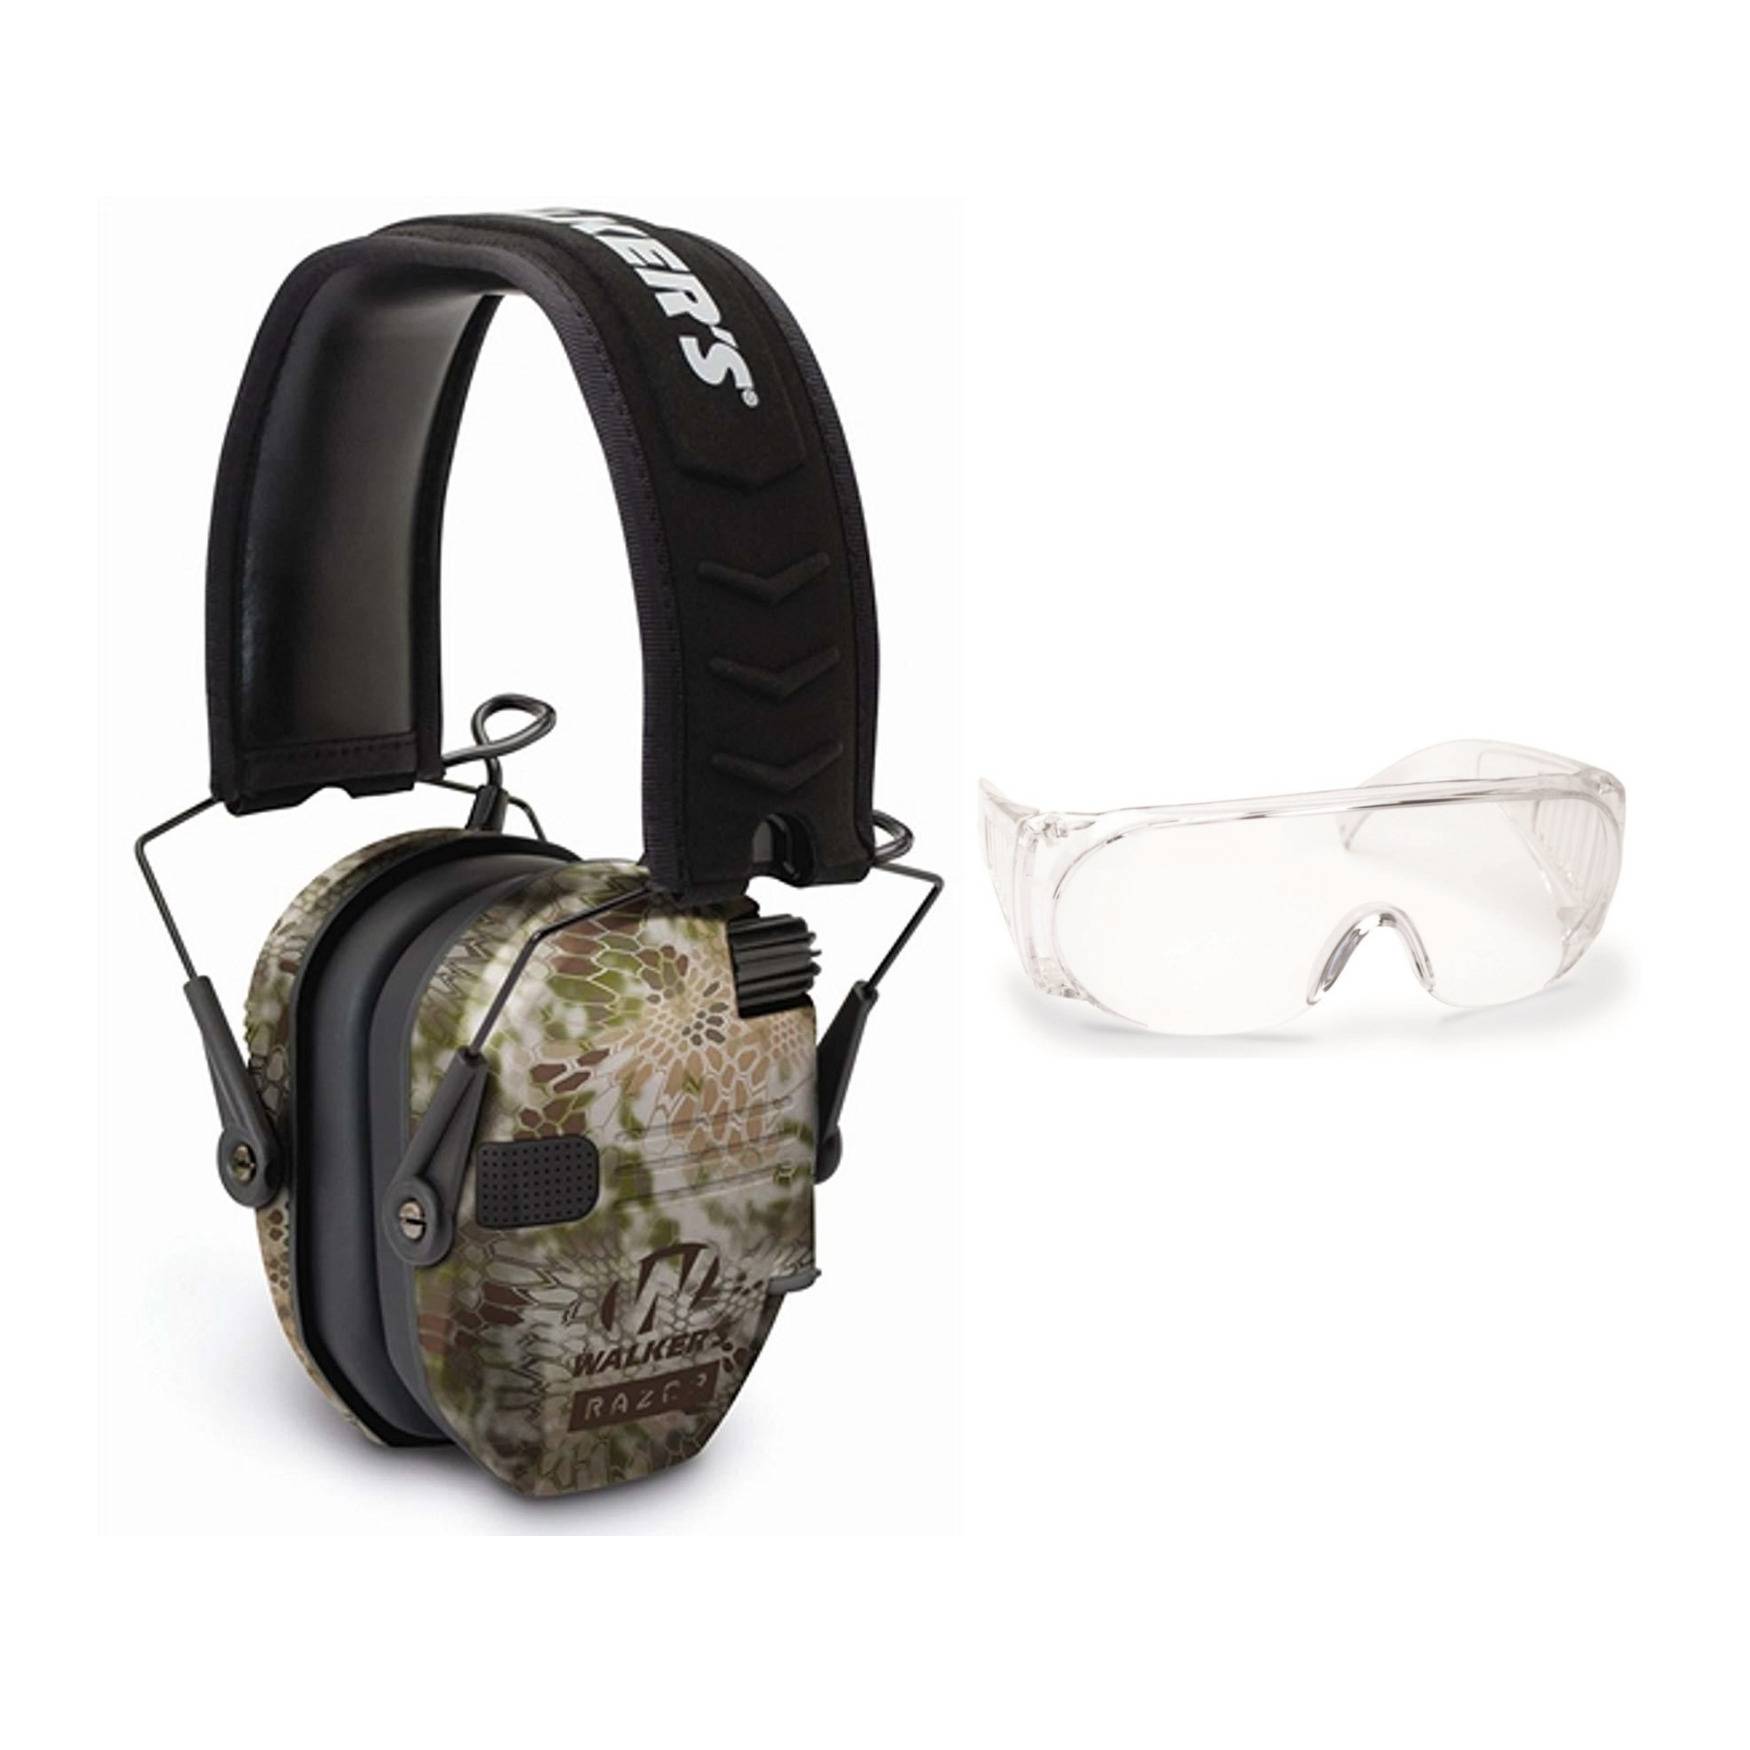 Walker's Razor Slim Shooting Muffs (Kryptek Camo) with OTG Safety Glasses